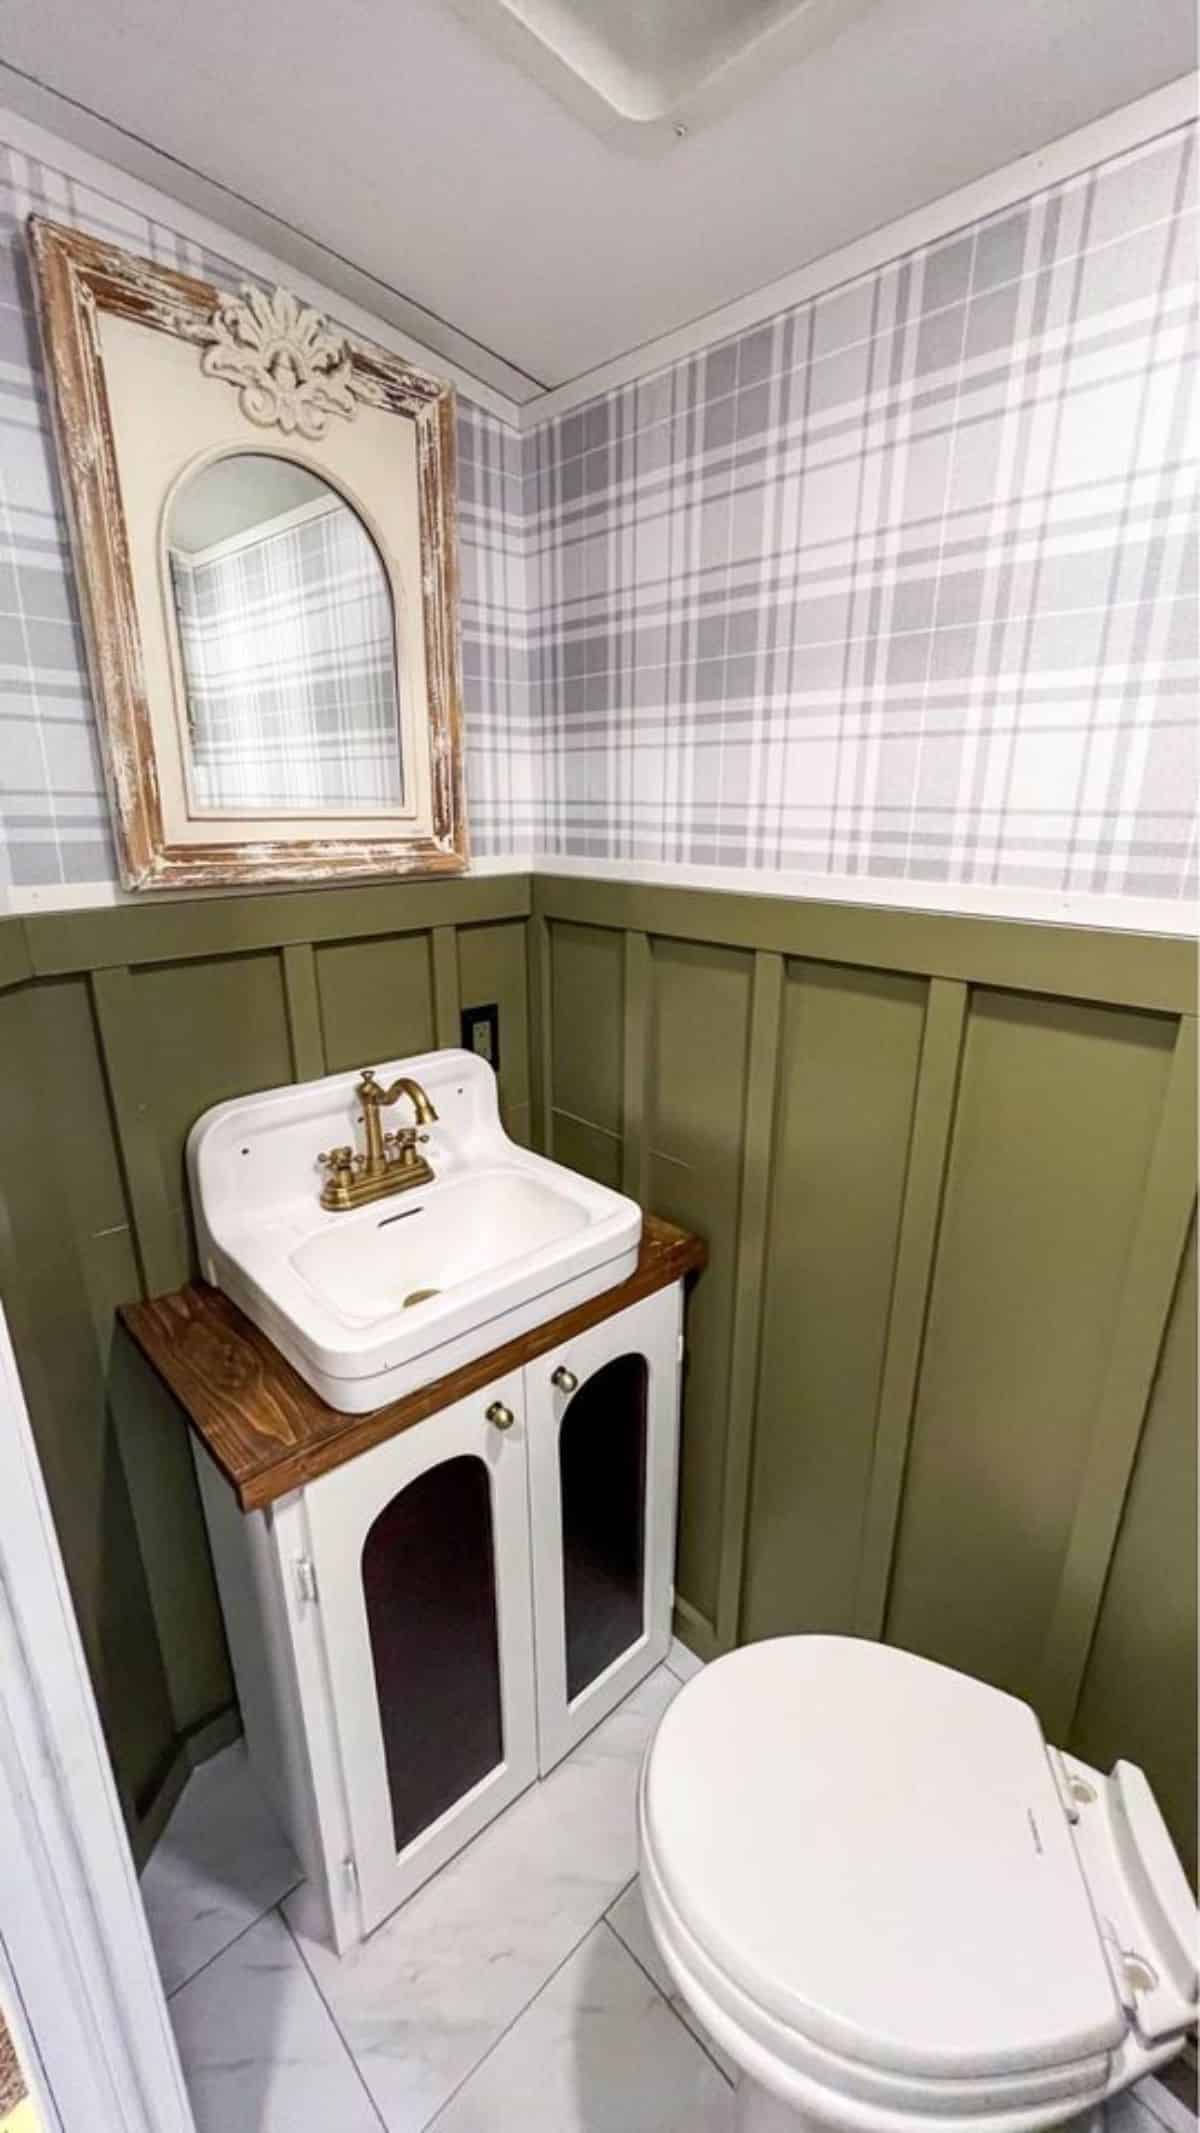 Sink with vanity and mirror, standard toilet in bathroom